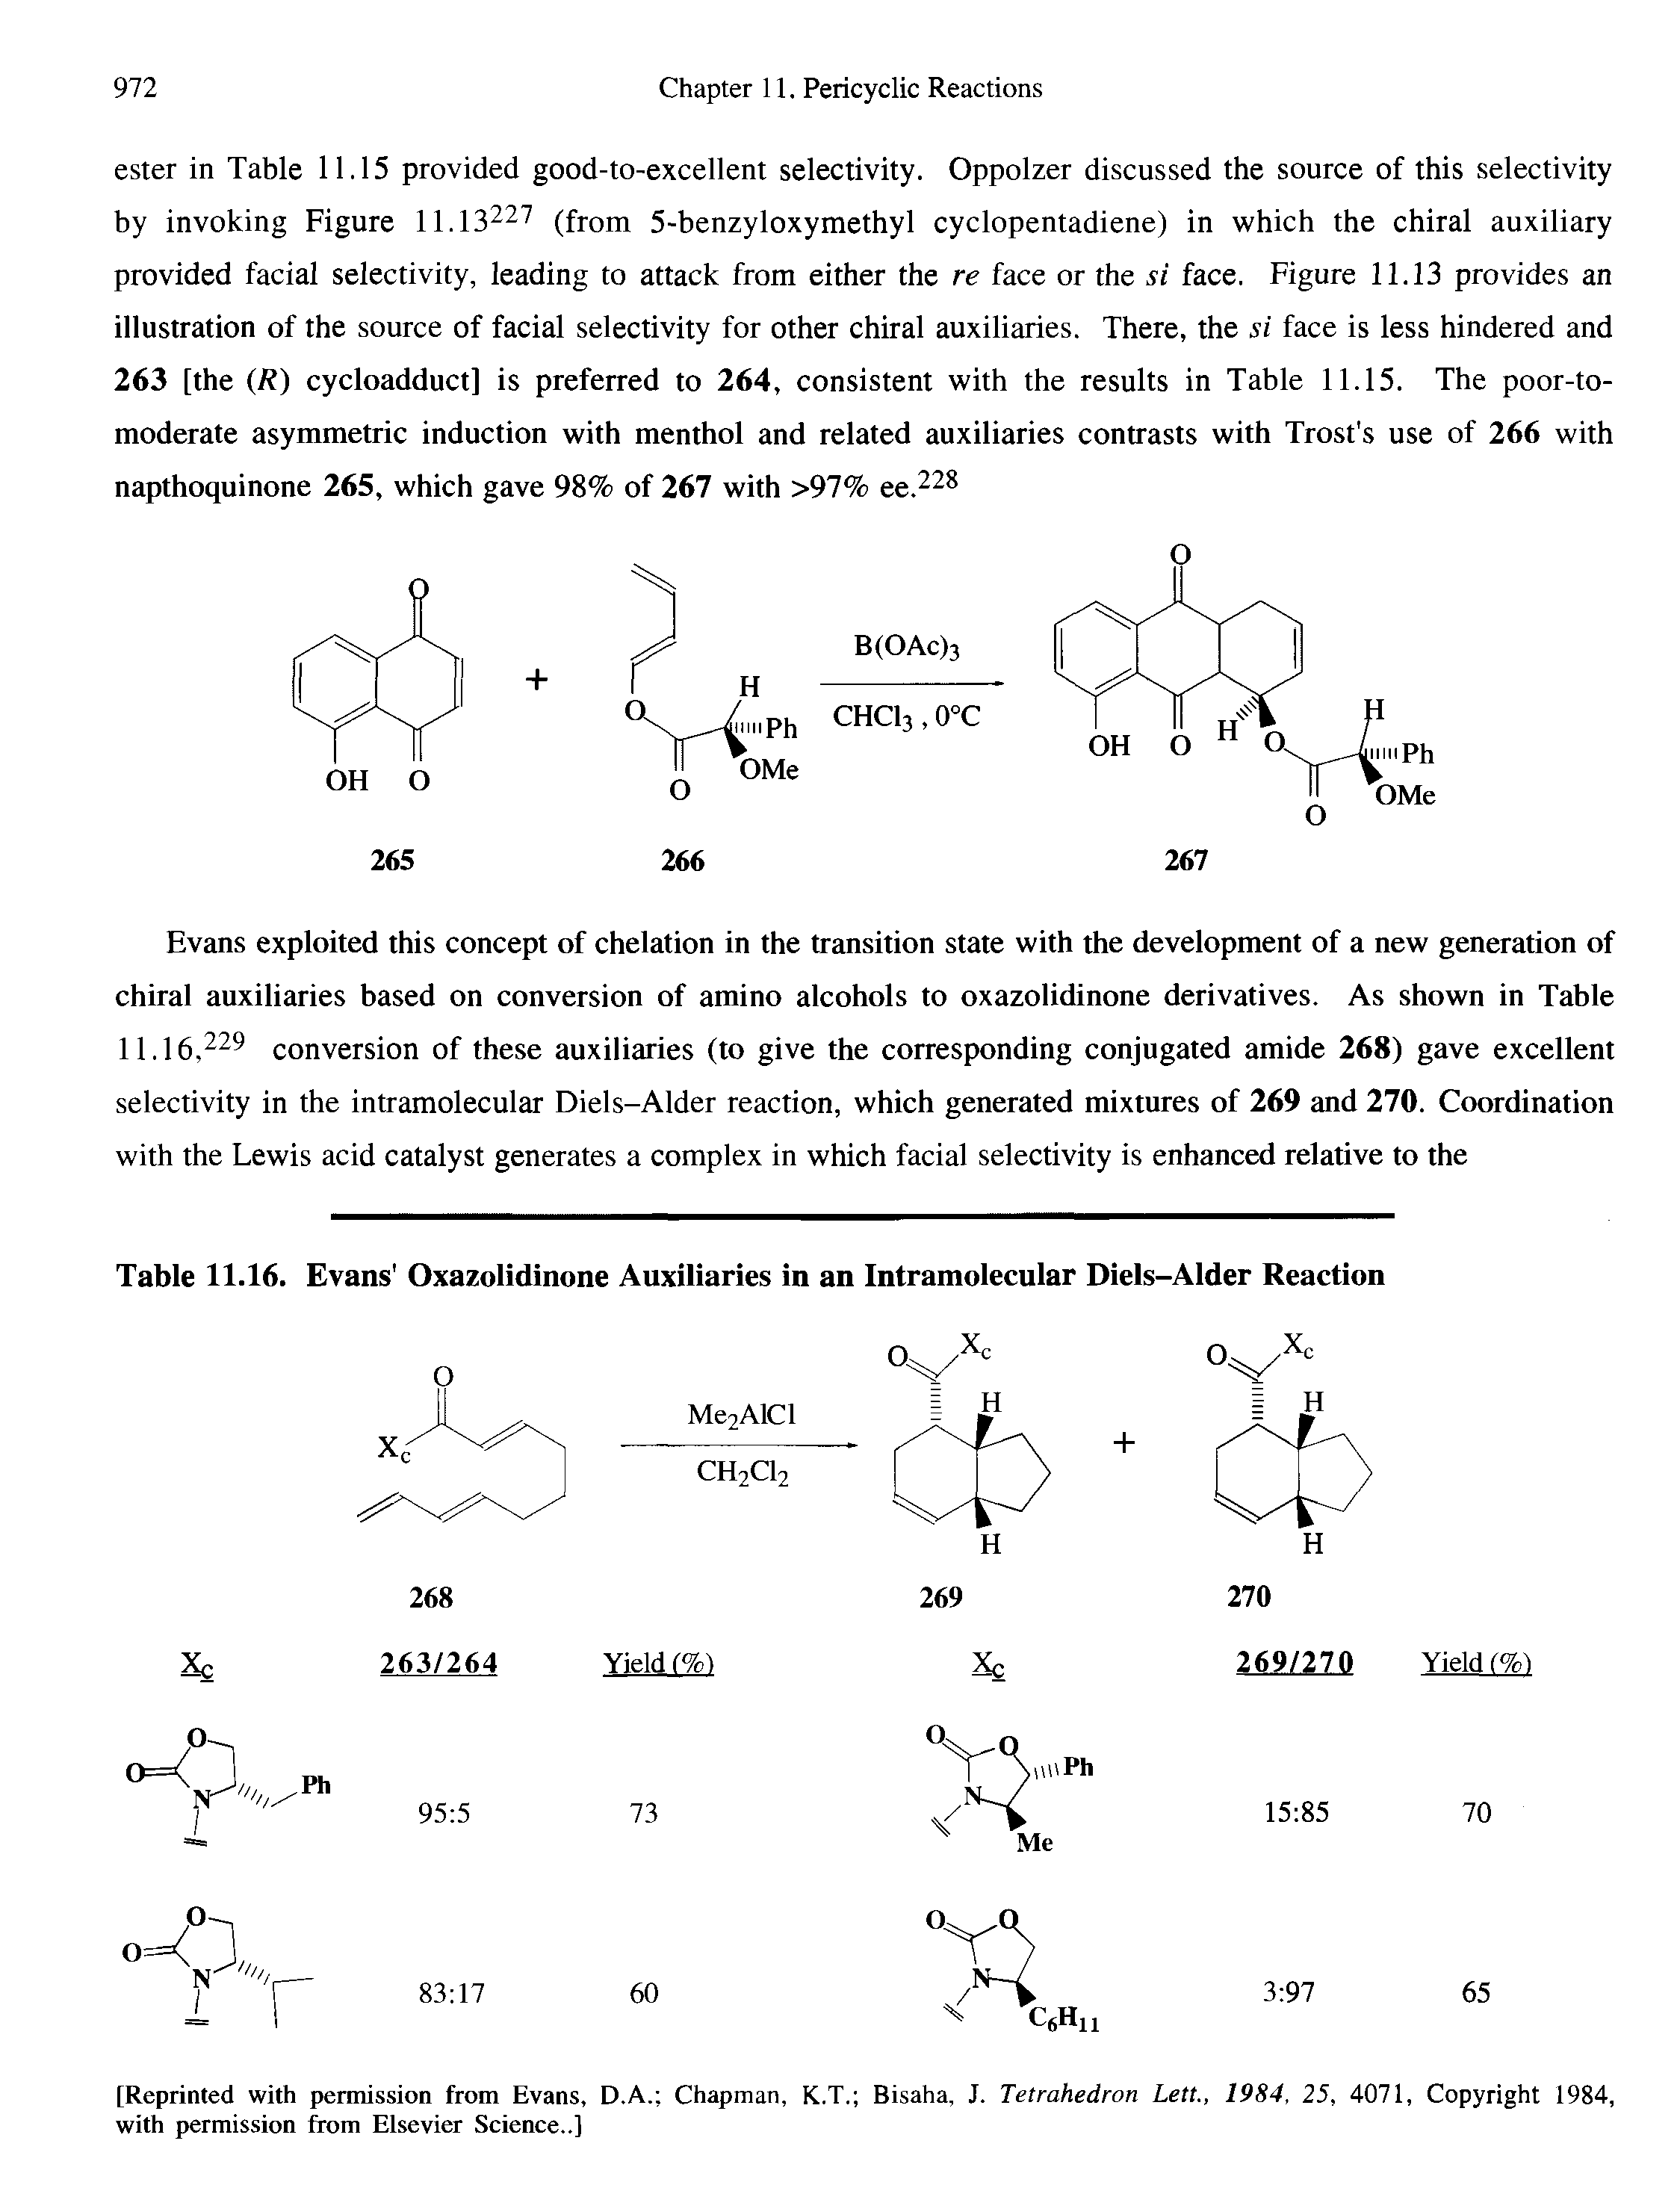 Table 11.16. Evans Oxazolidinone Auxiliaries in an Intramolecular Diels-Alder Reaction...